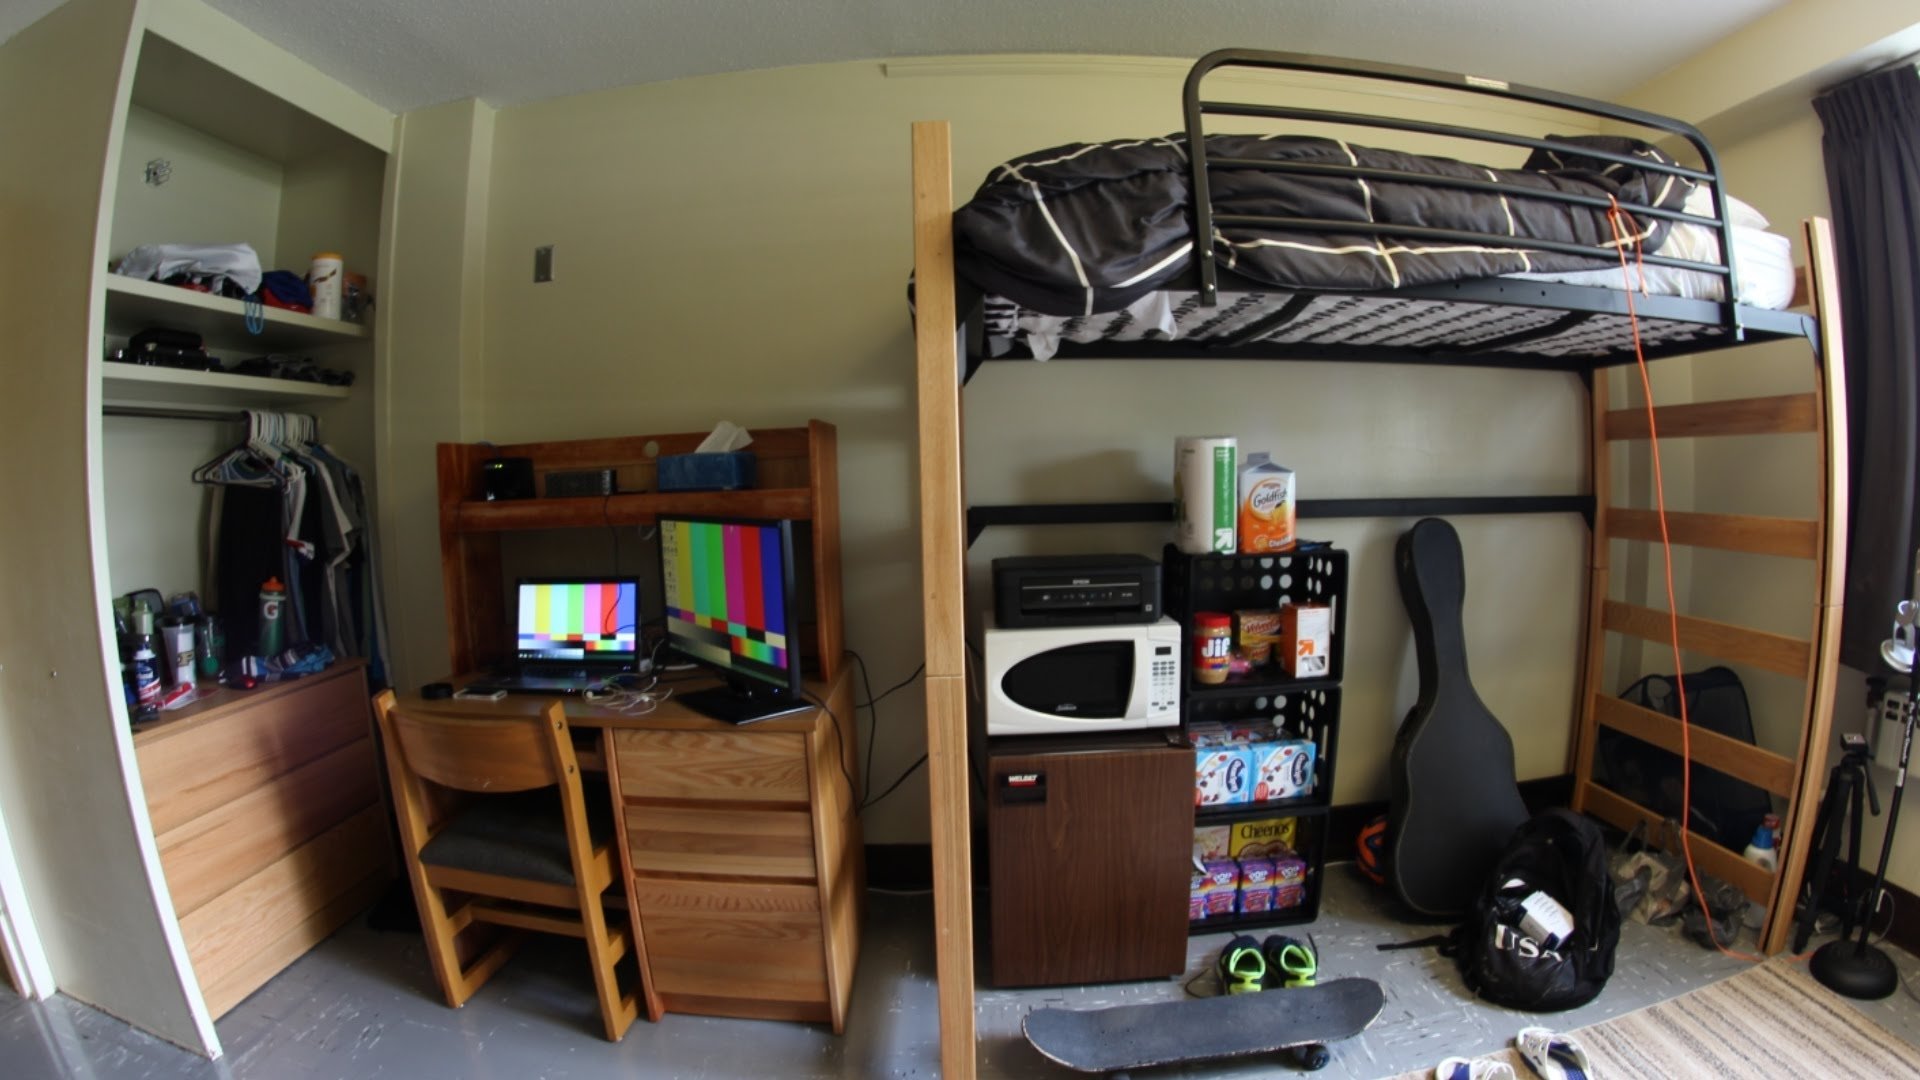 Dorm room scare higher pics quality compilation